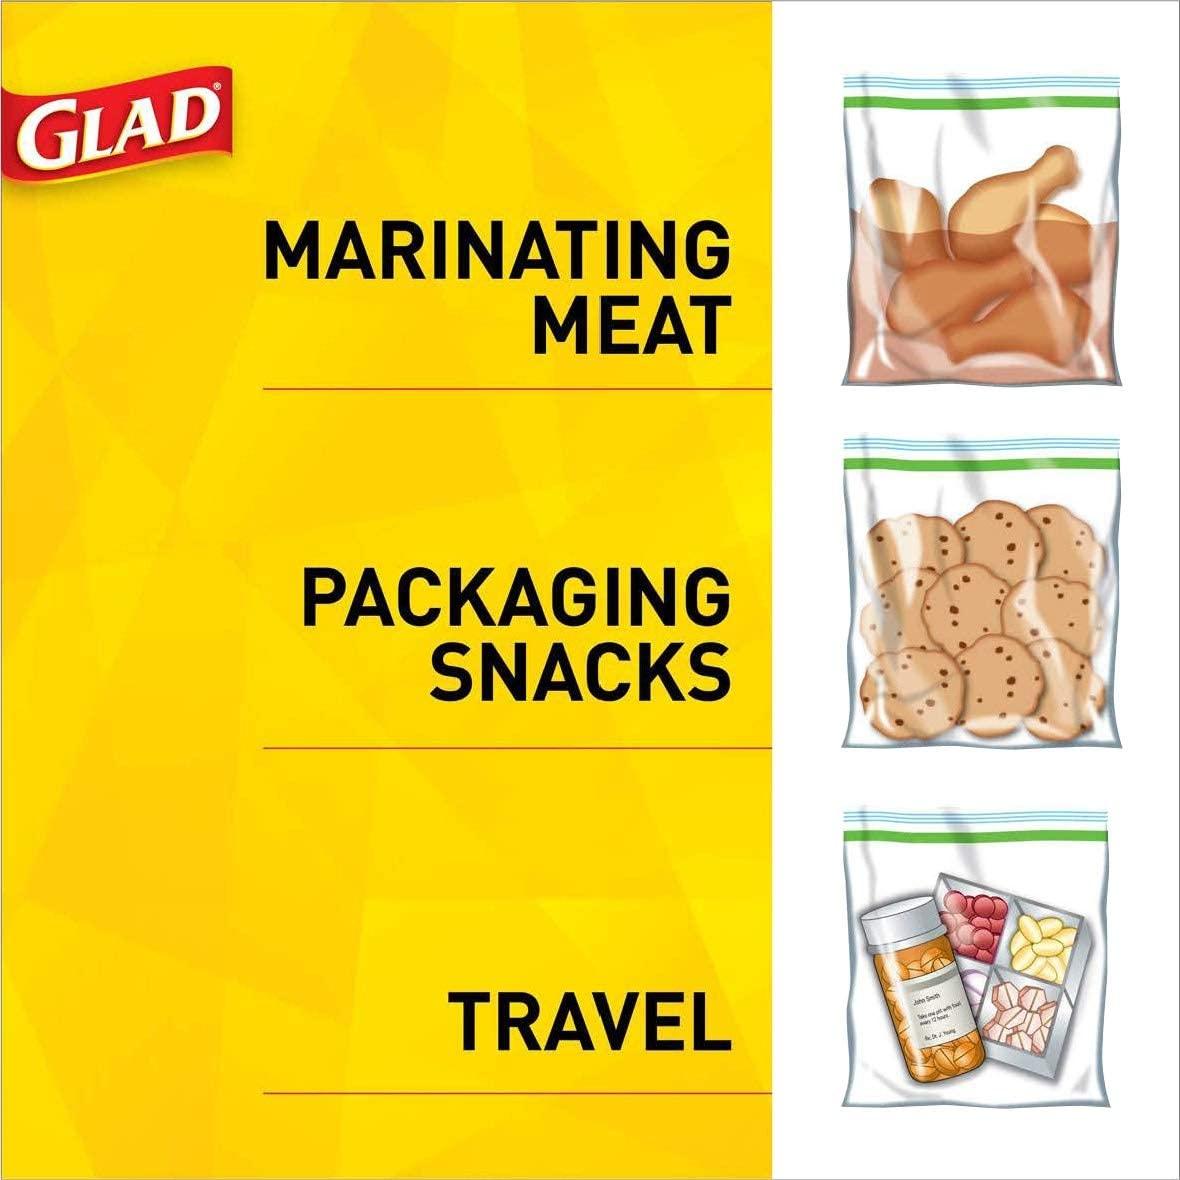 Glad - Zipper Food Storage Plastic Bags - Quart - 50 Count